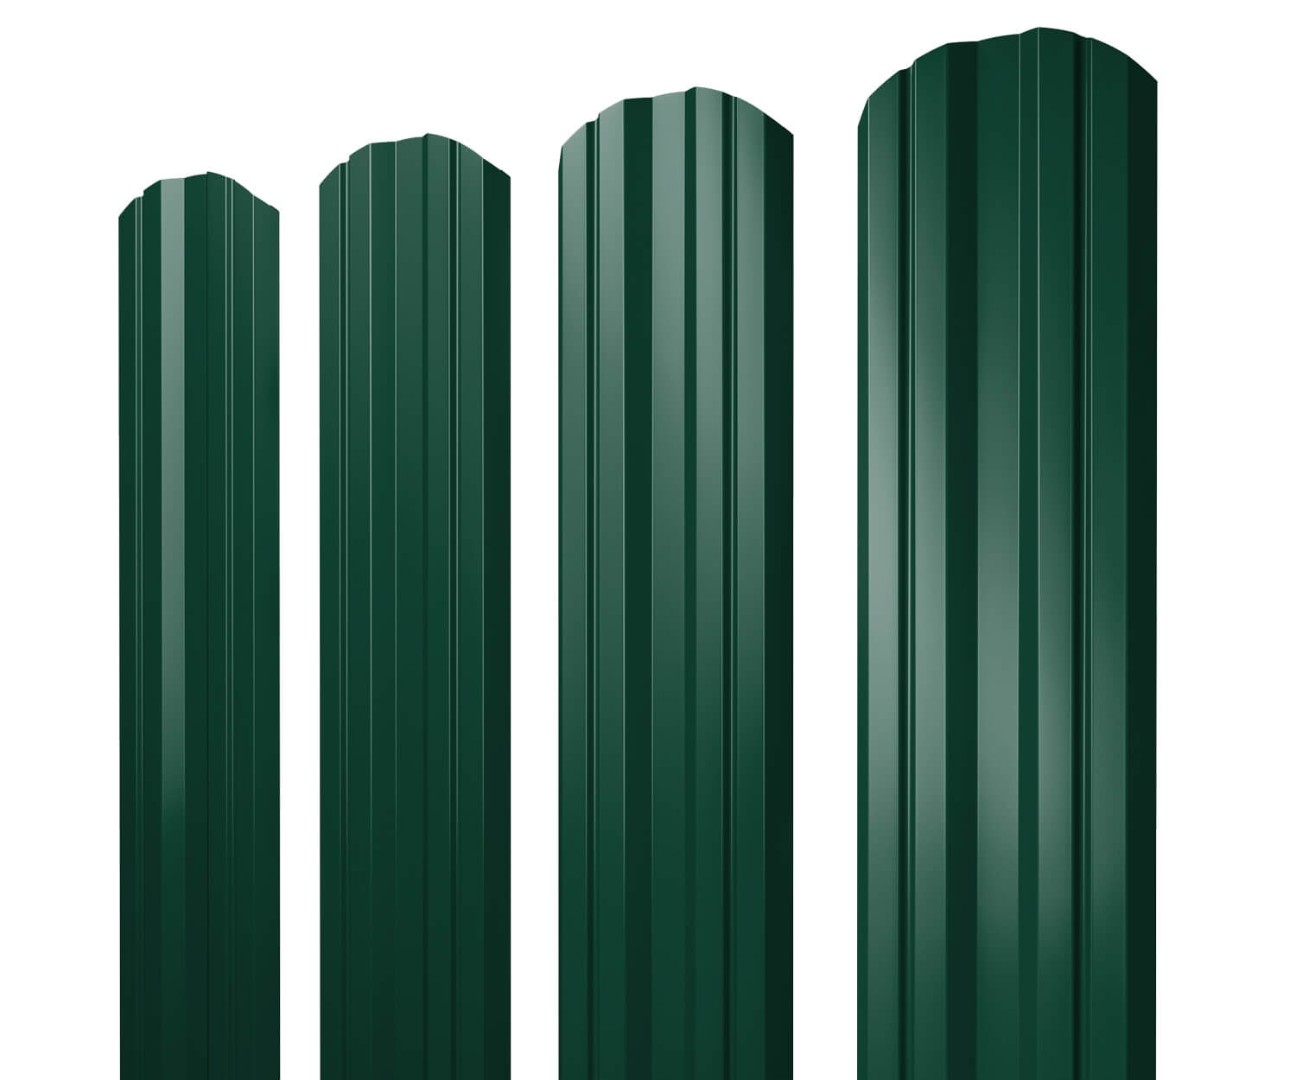 Штакетник Twin фигурный 0,5 Satin RAL 6005 зеленый мох